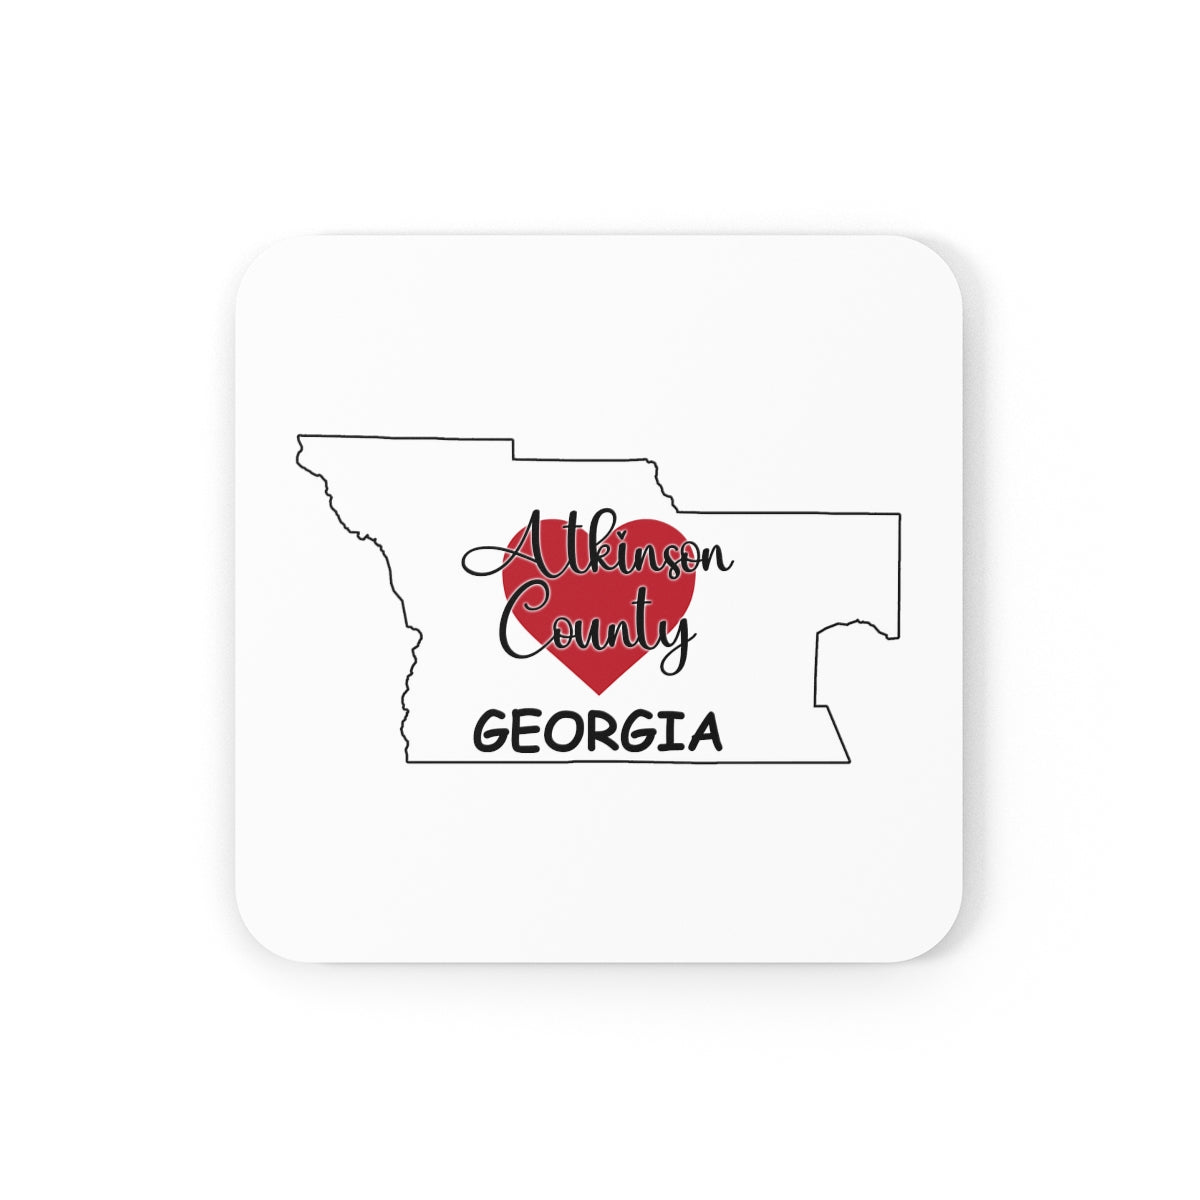 Atkinson County Georgia Corkwood Coaster Set